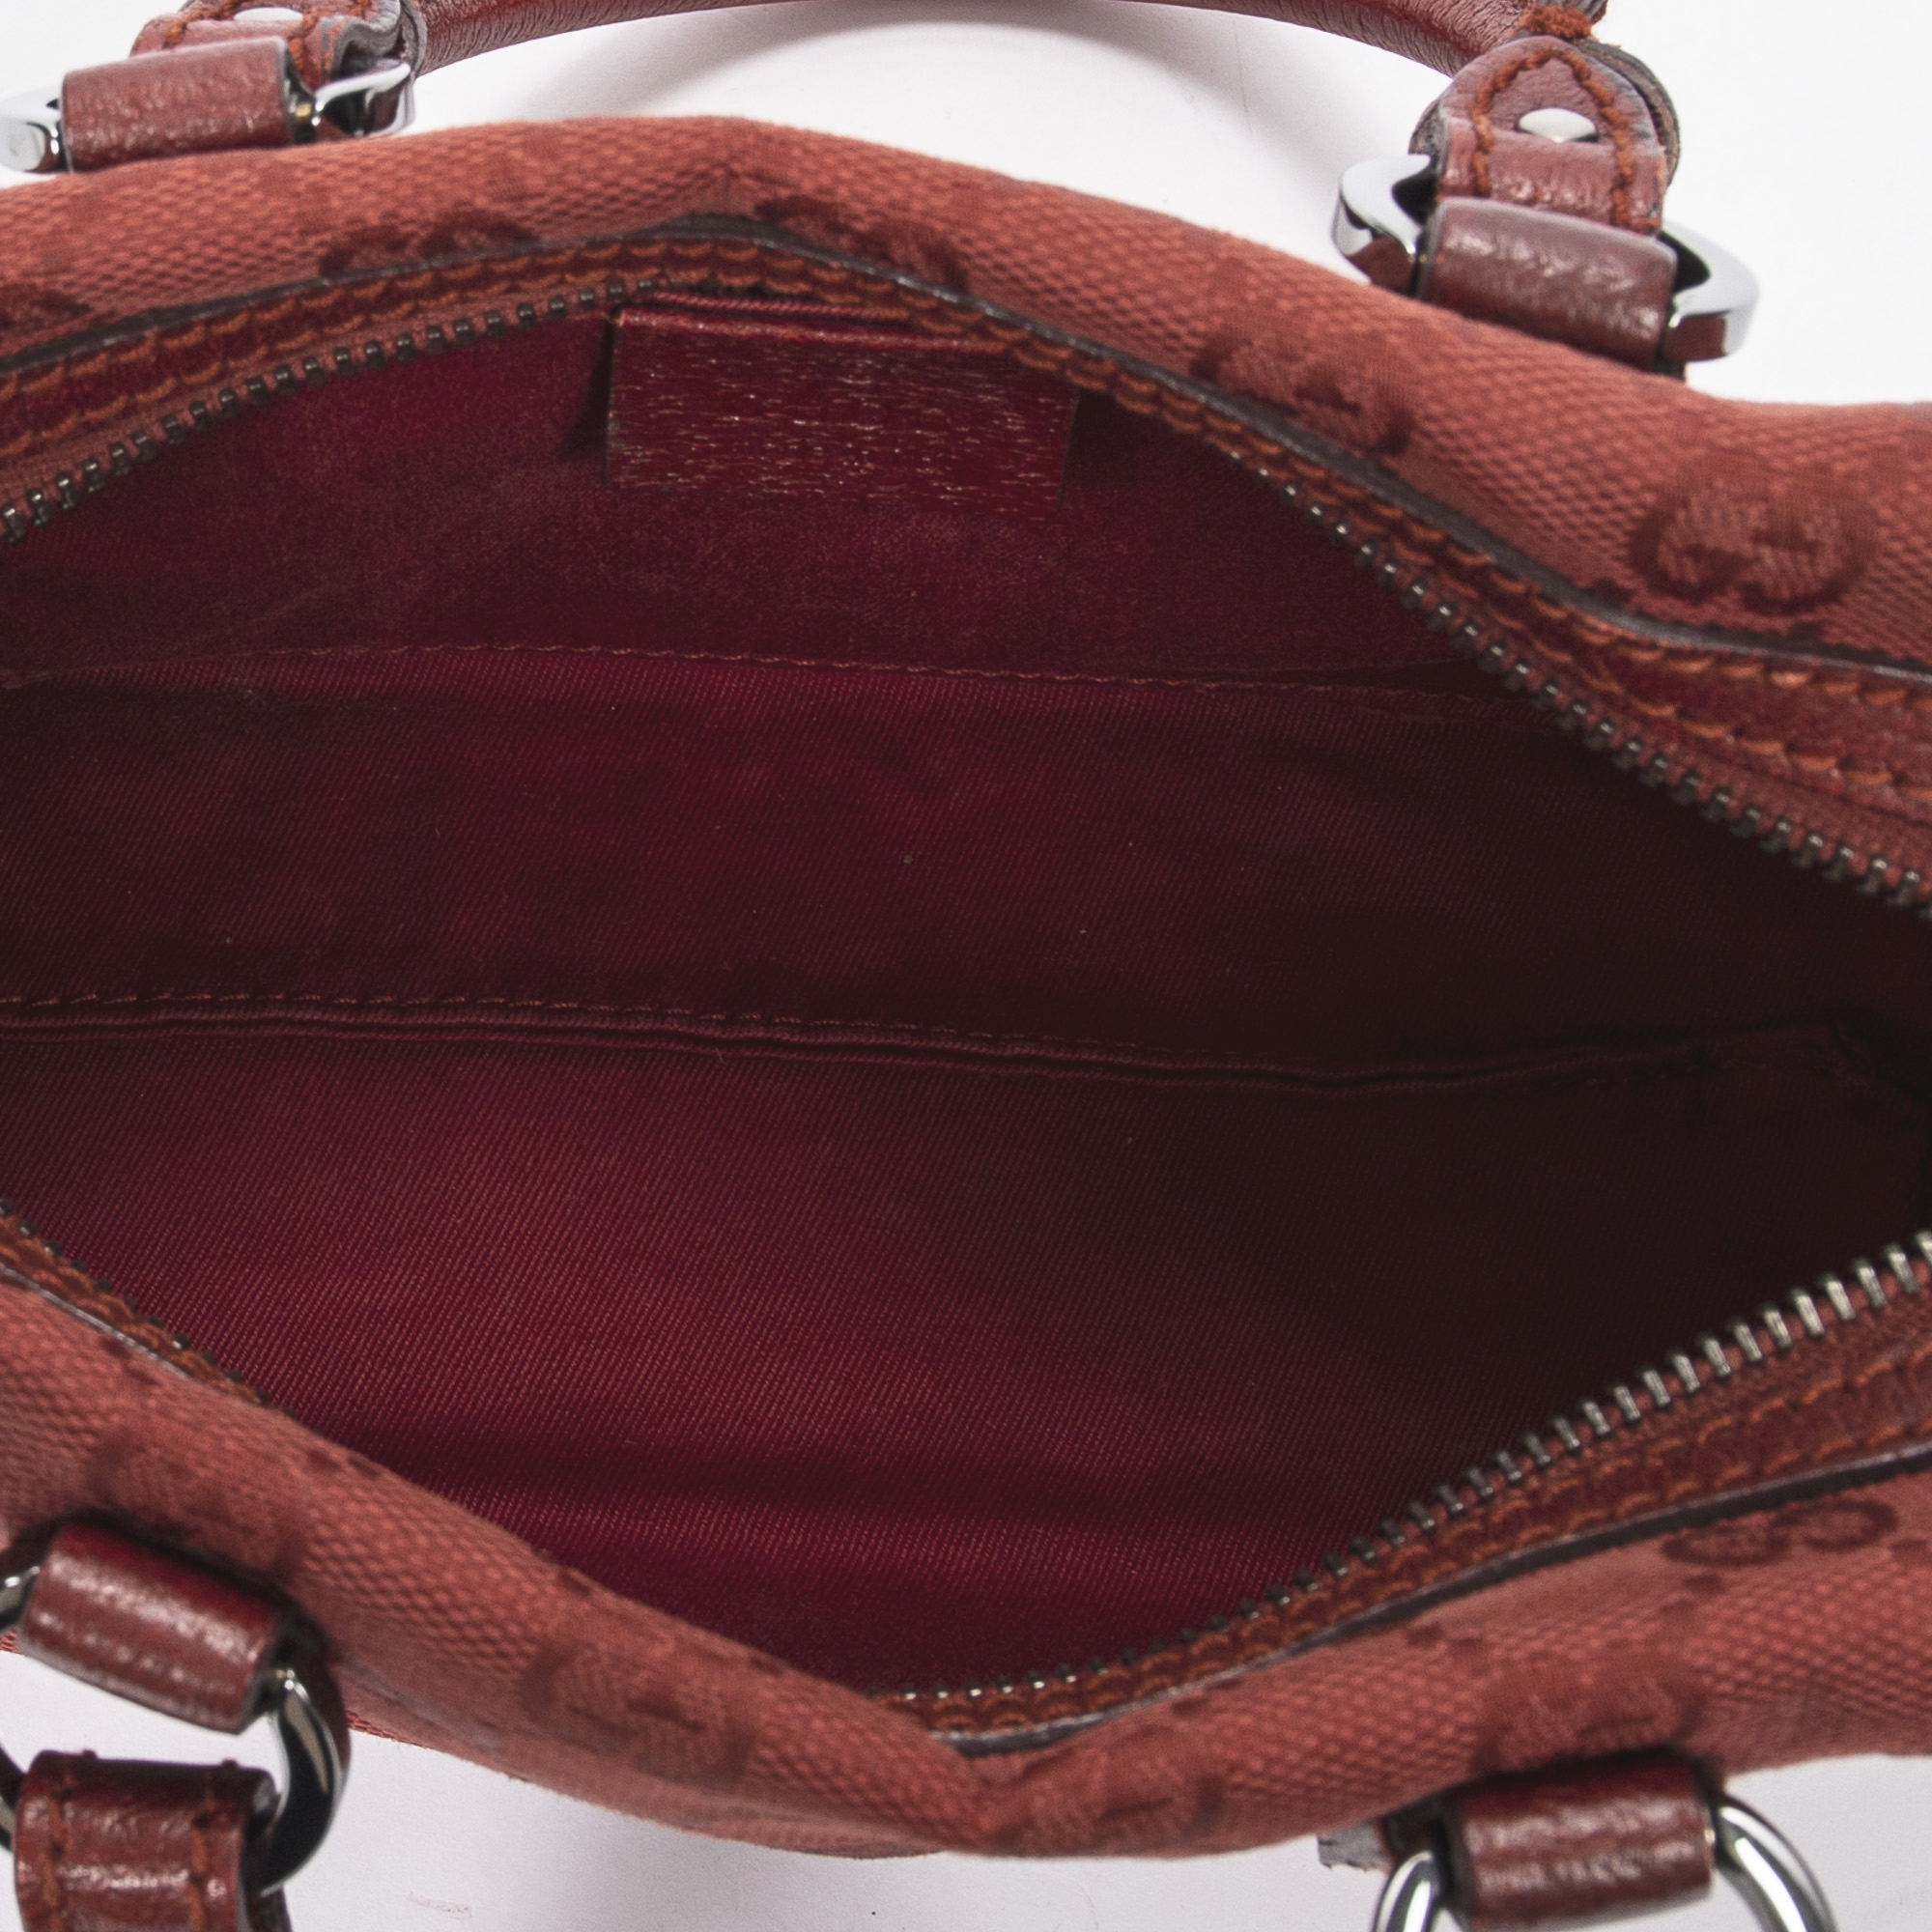 Boston leather mini bag